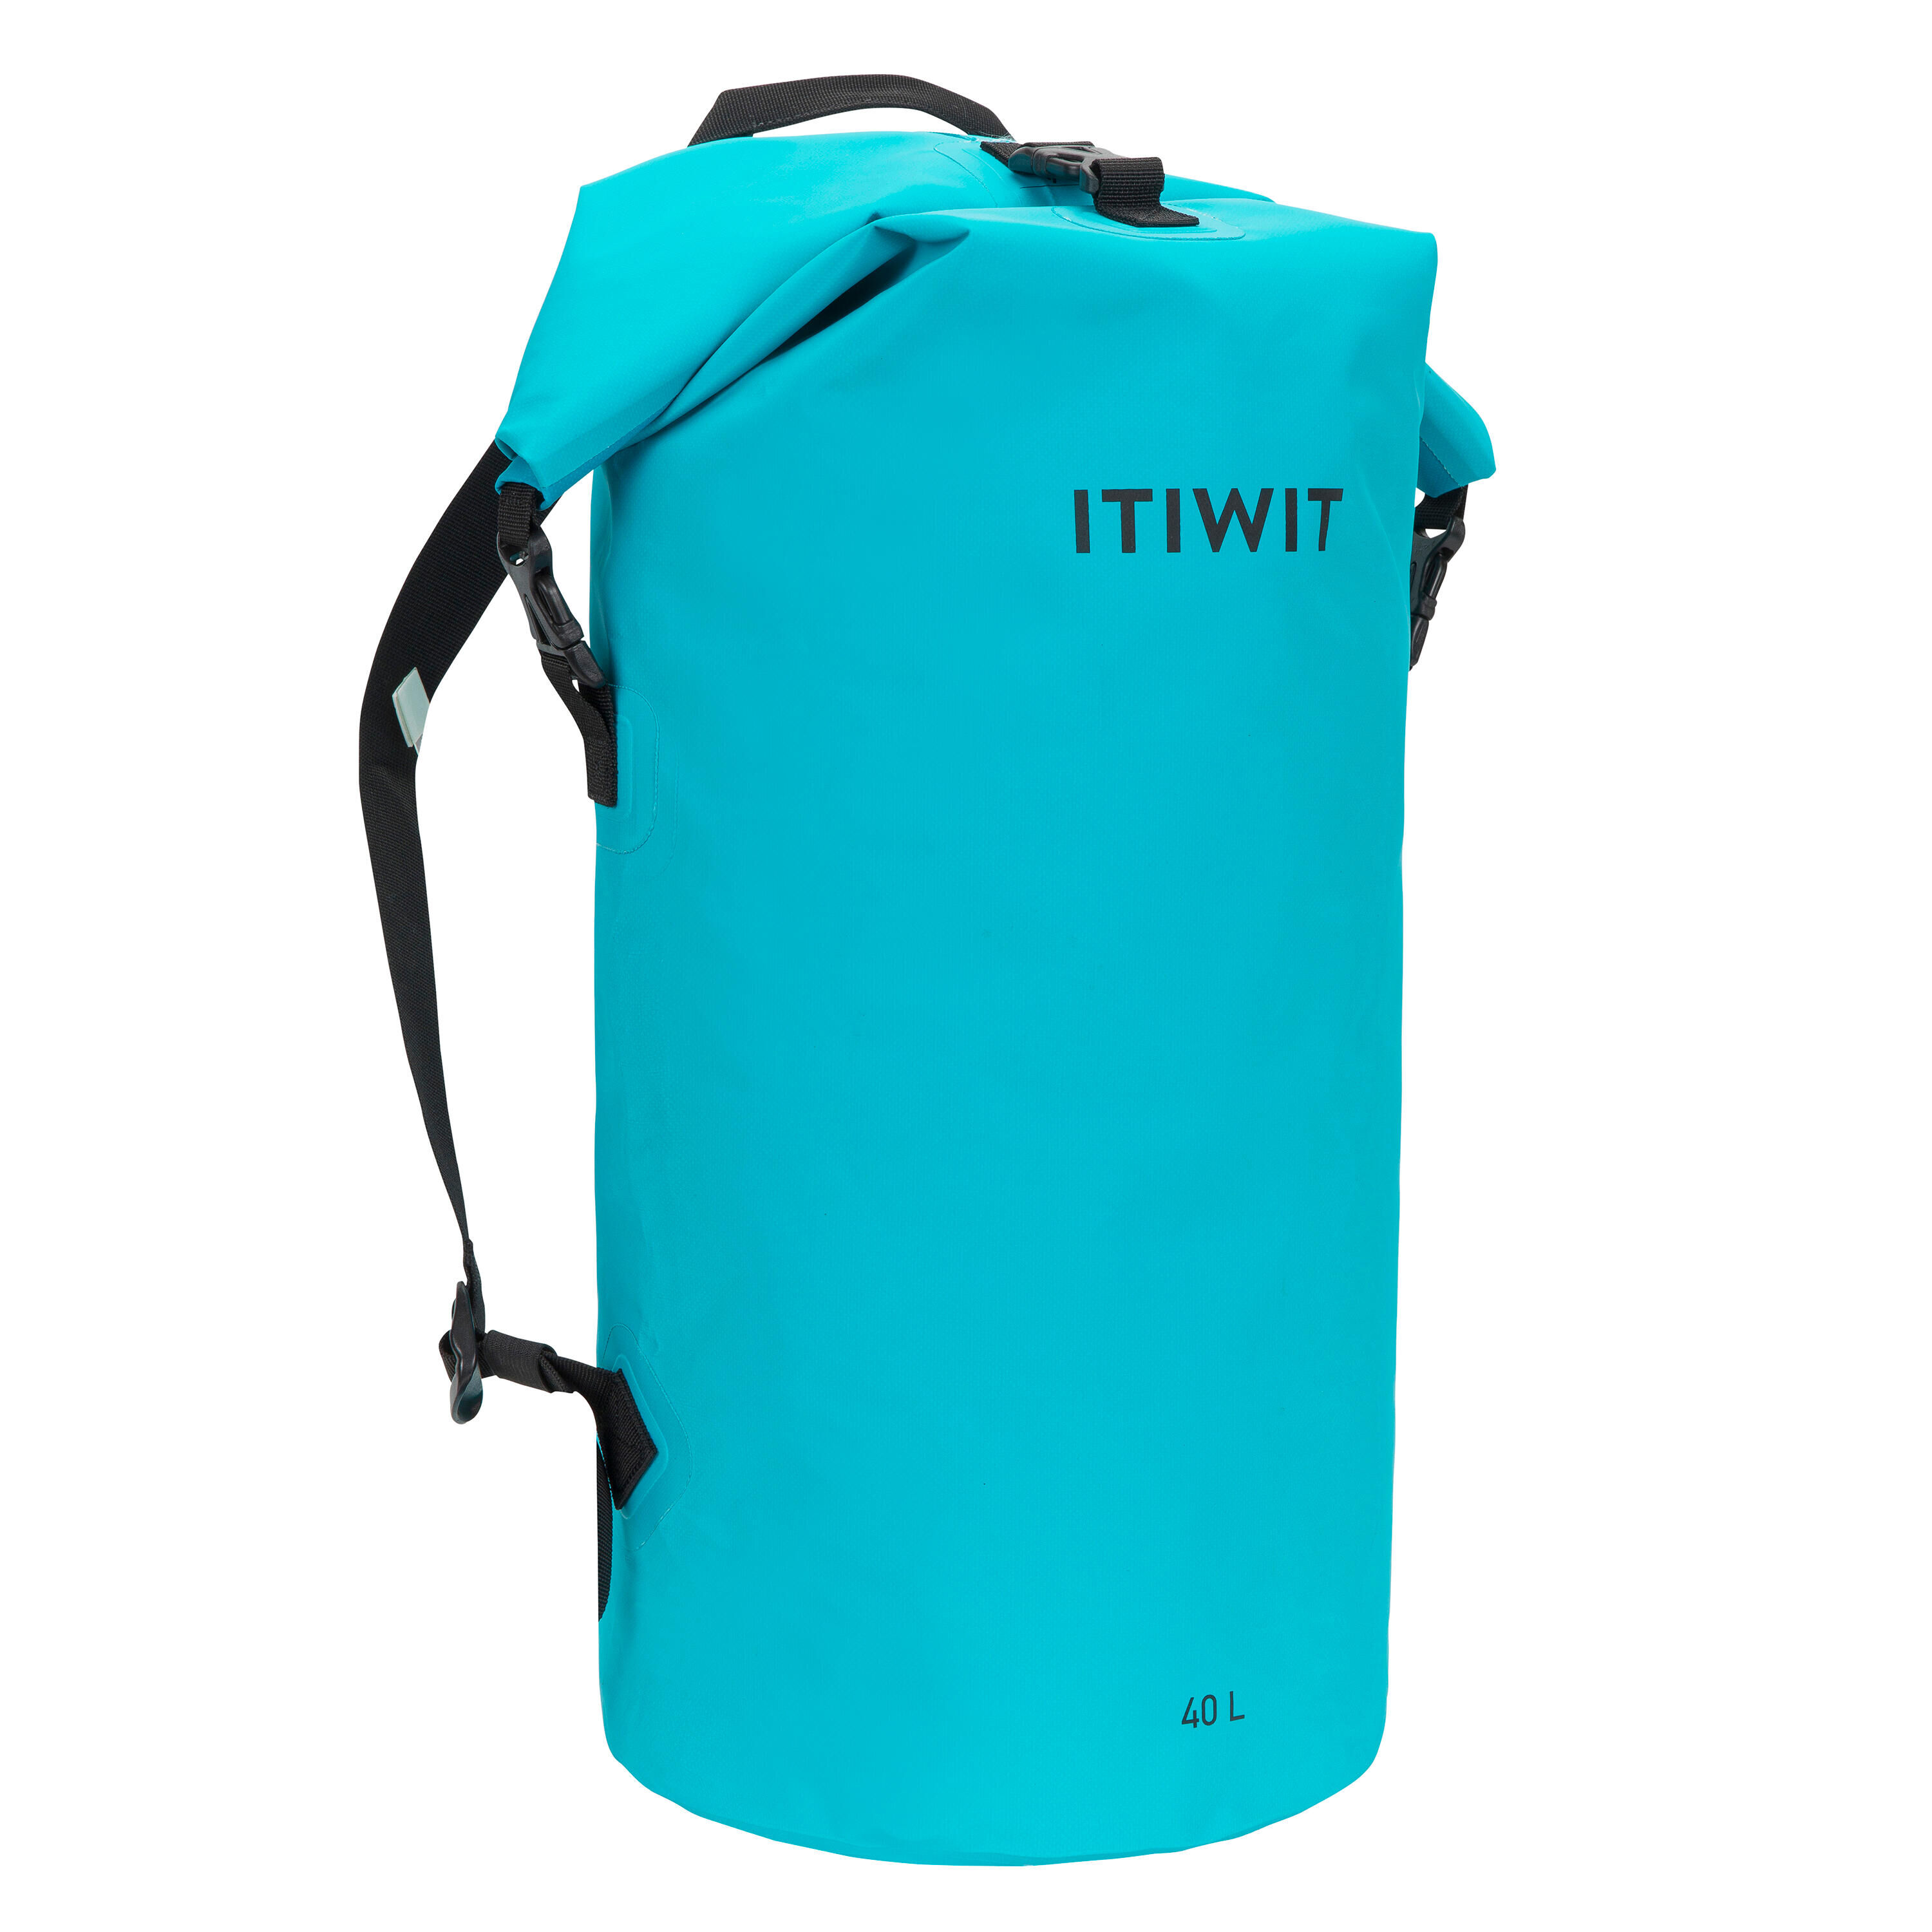 ITIWIT Waterproof Bag IPX6 40 L Turquoise